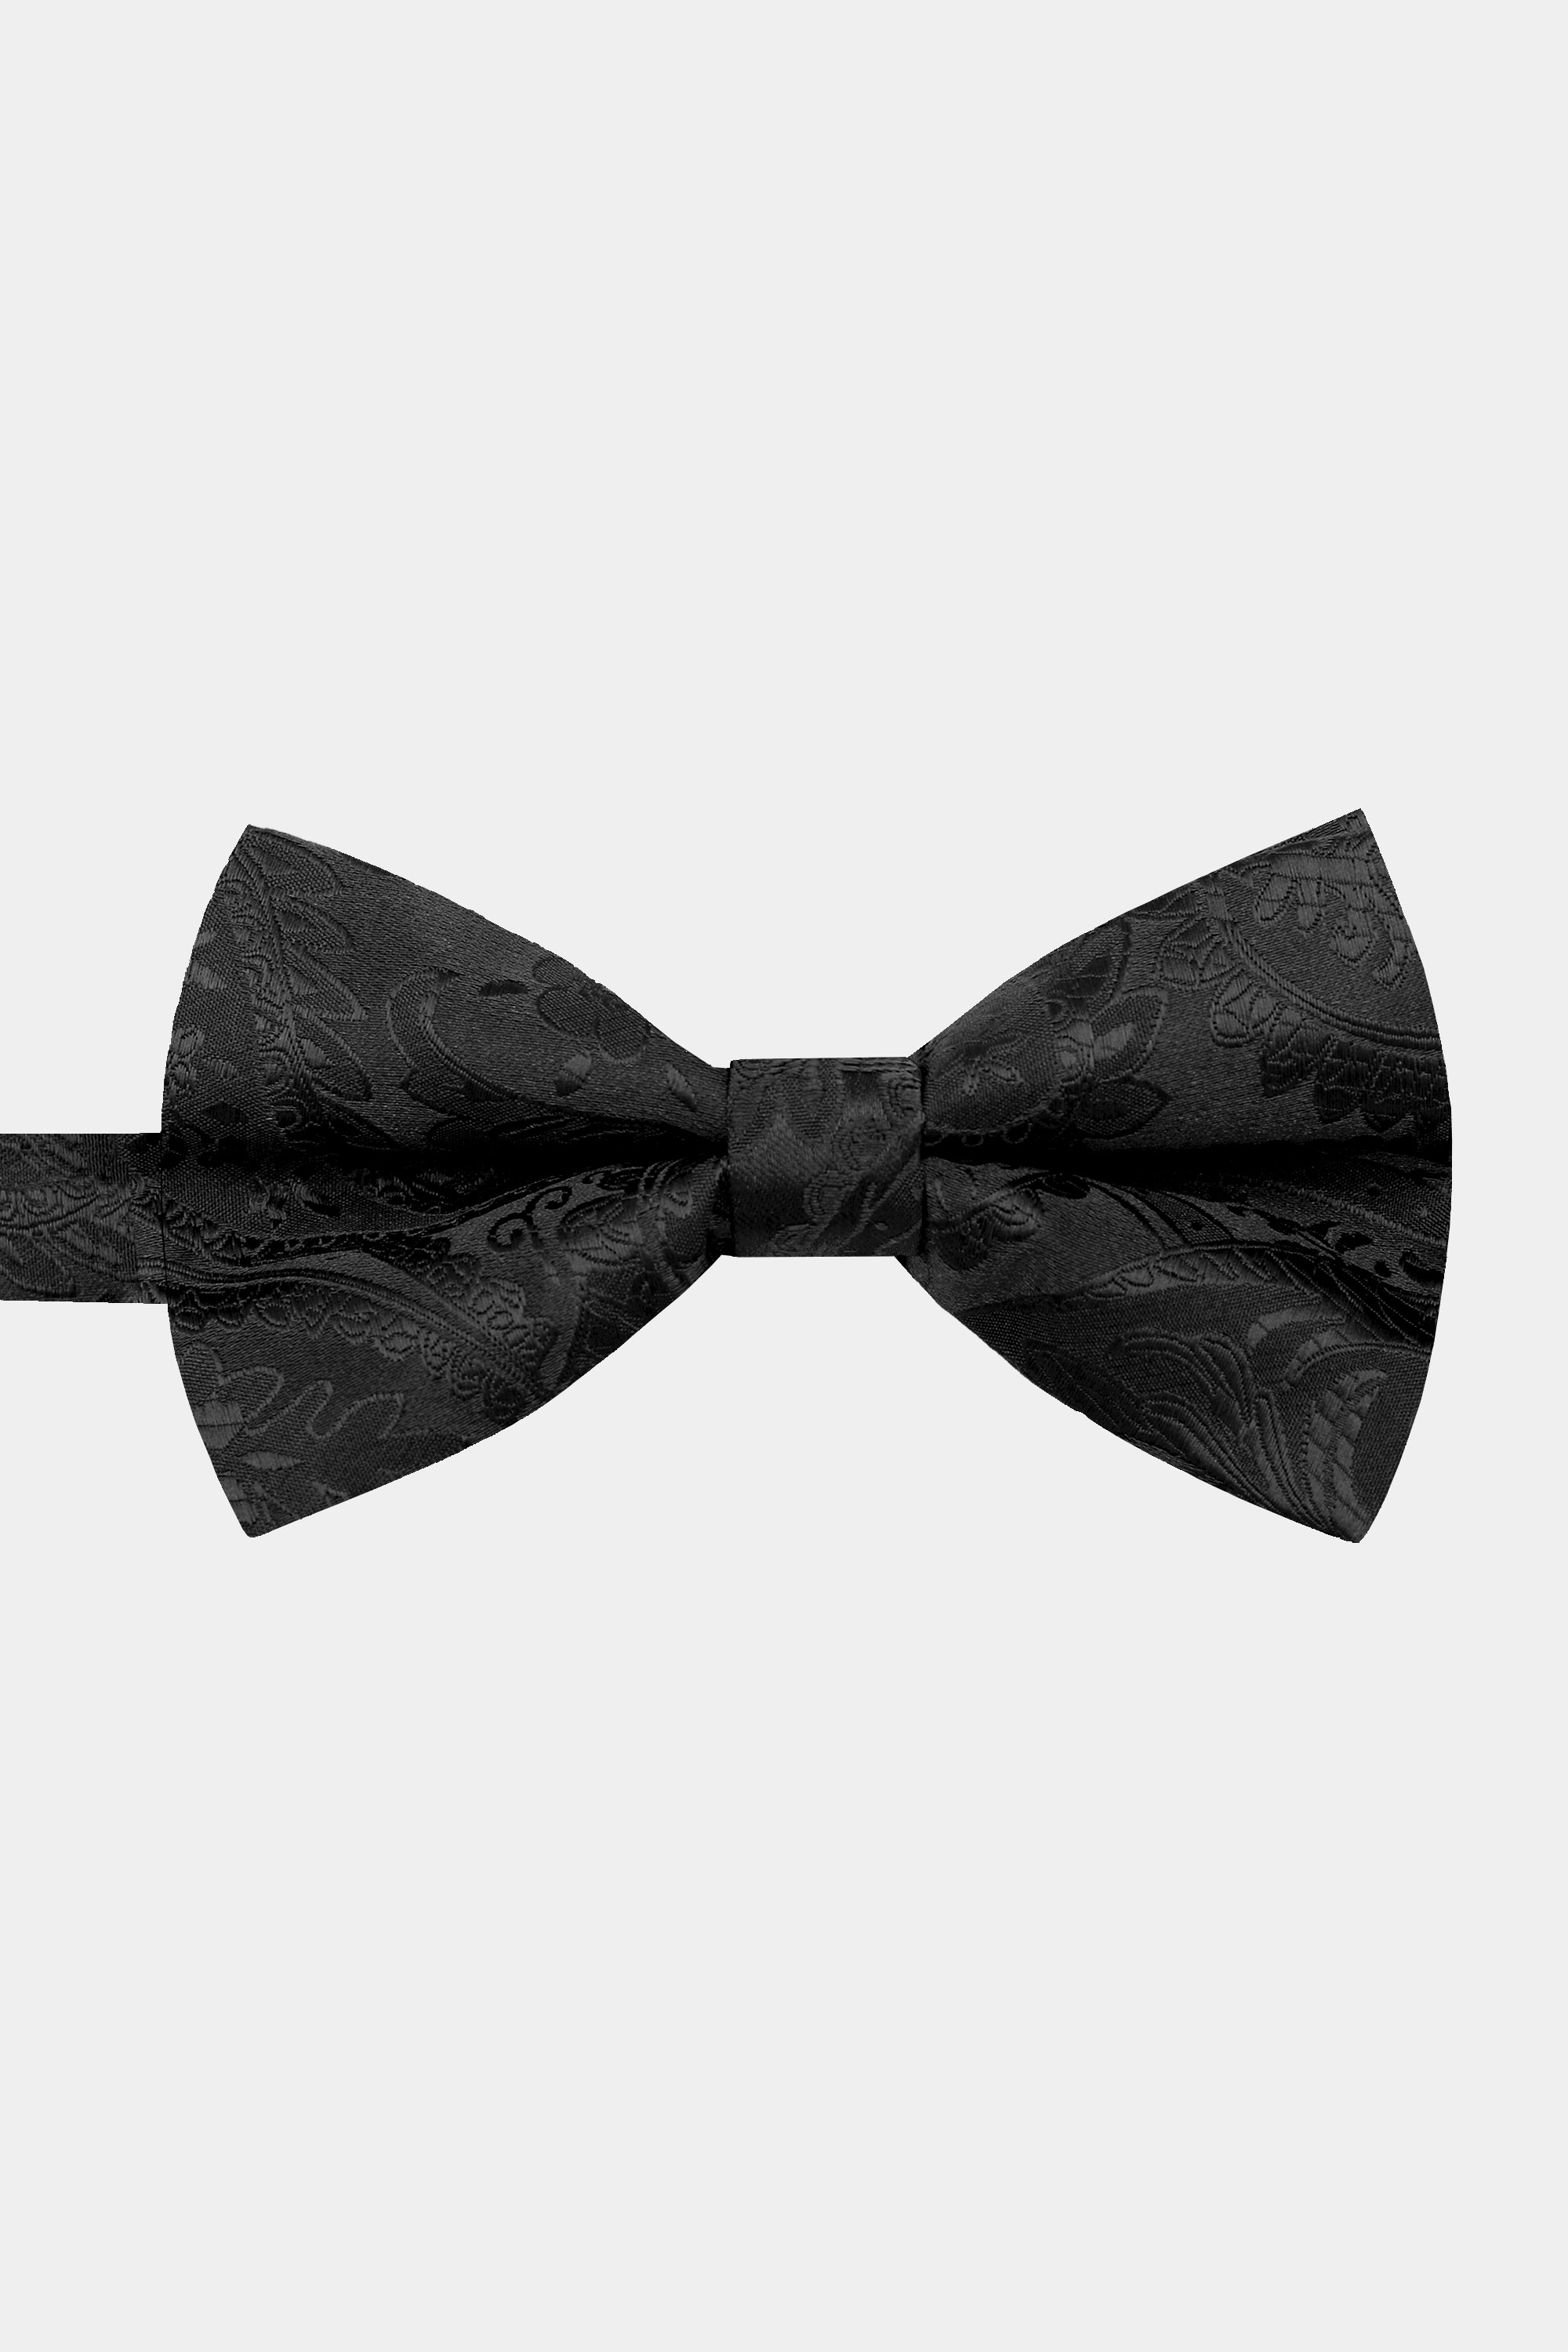 Paisley-Black-Bow-Tie-from-Gentlemansguru.com